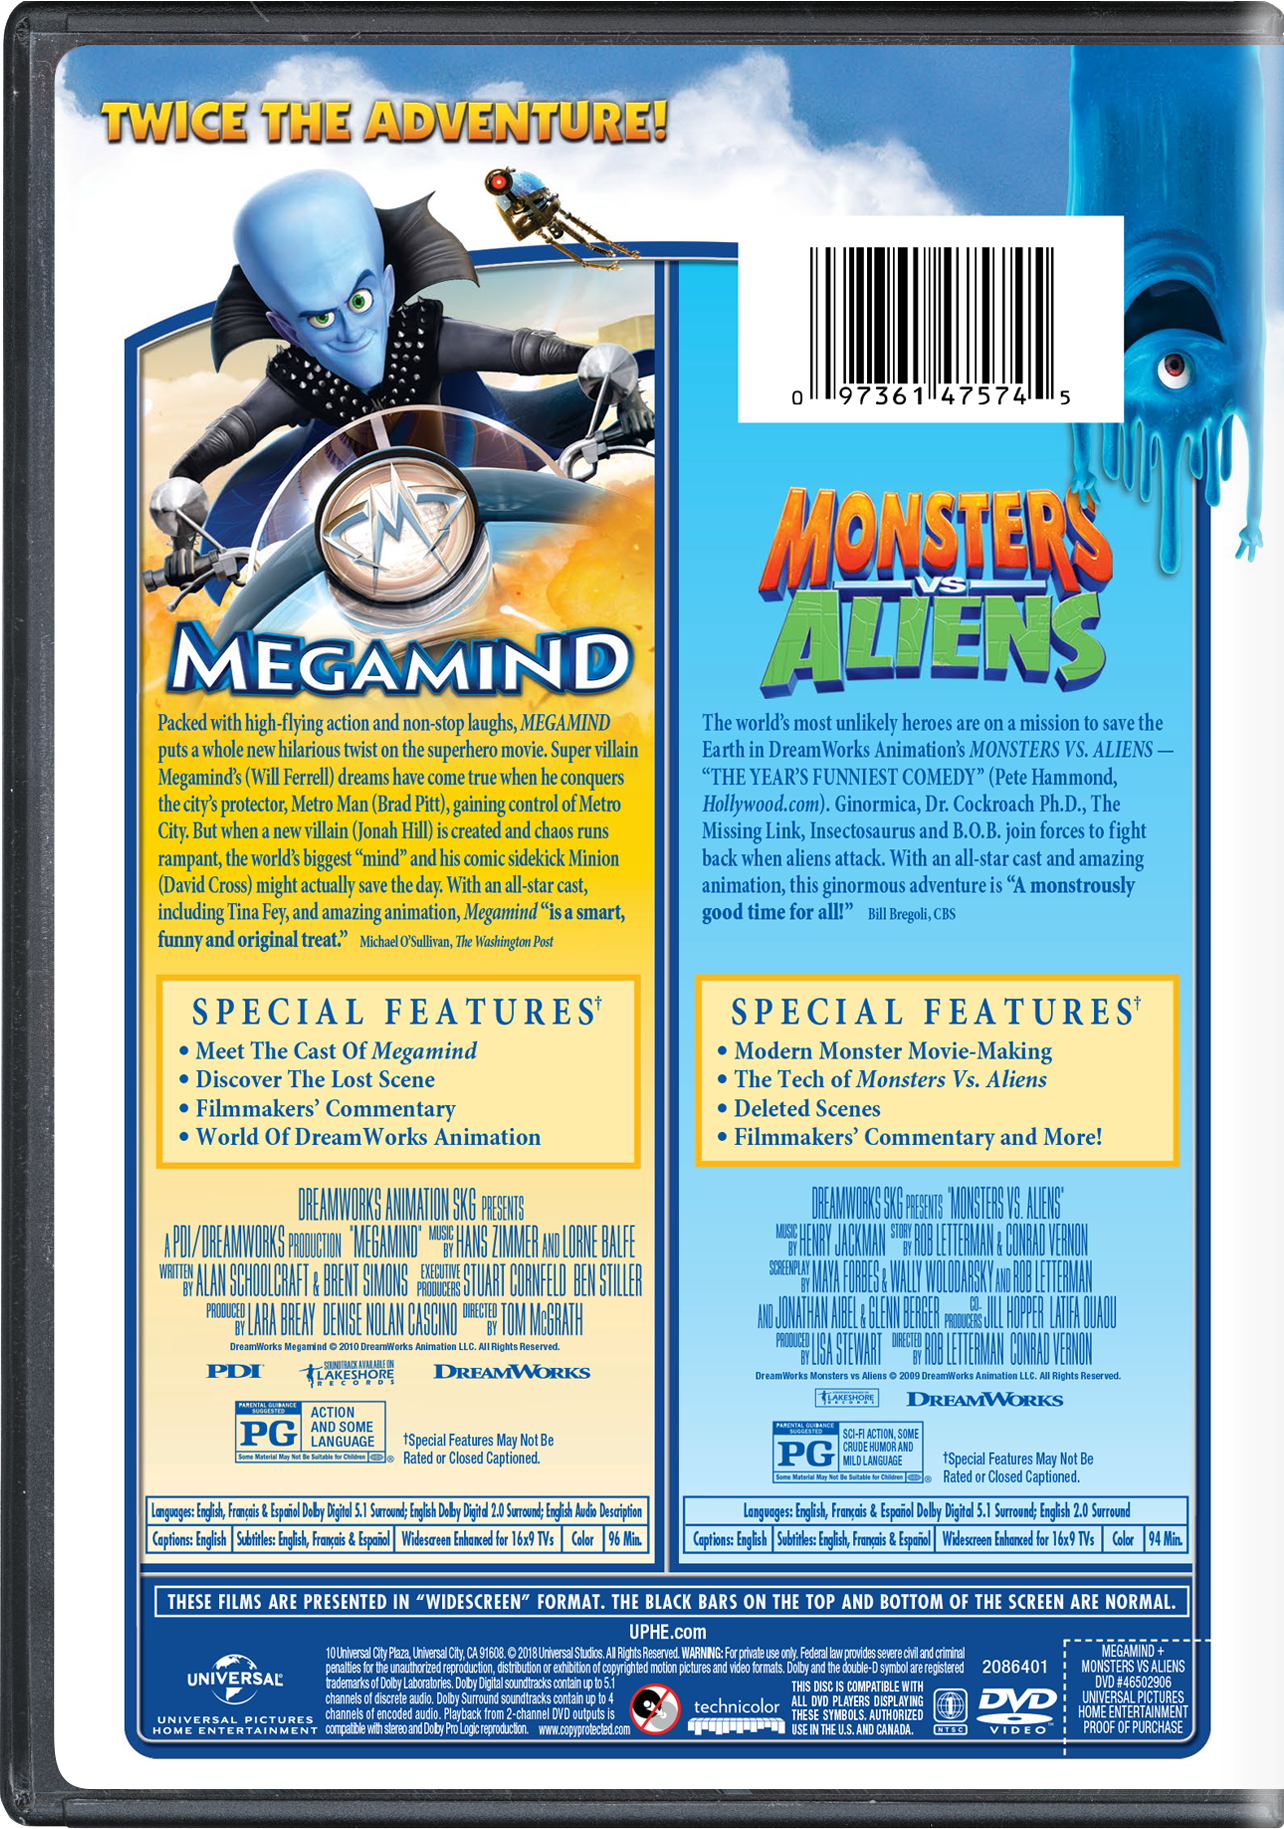 Megamind Vs Monsters Vs Aliens - HD Wallpaper 